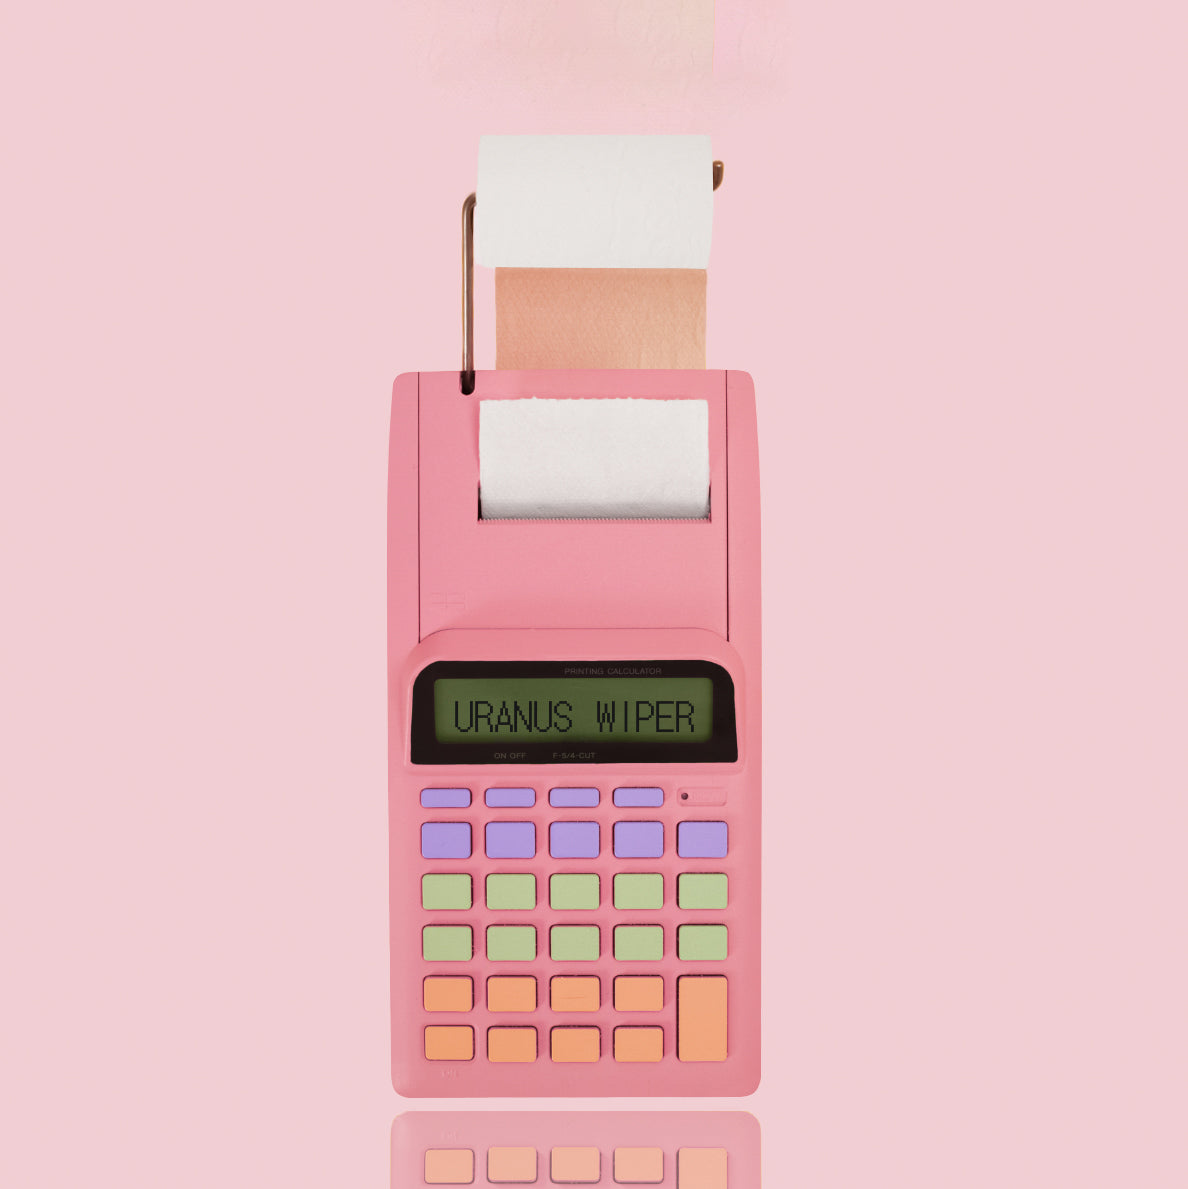 Uranus Wiper toilet roll calculator pink